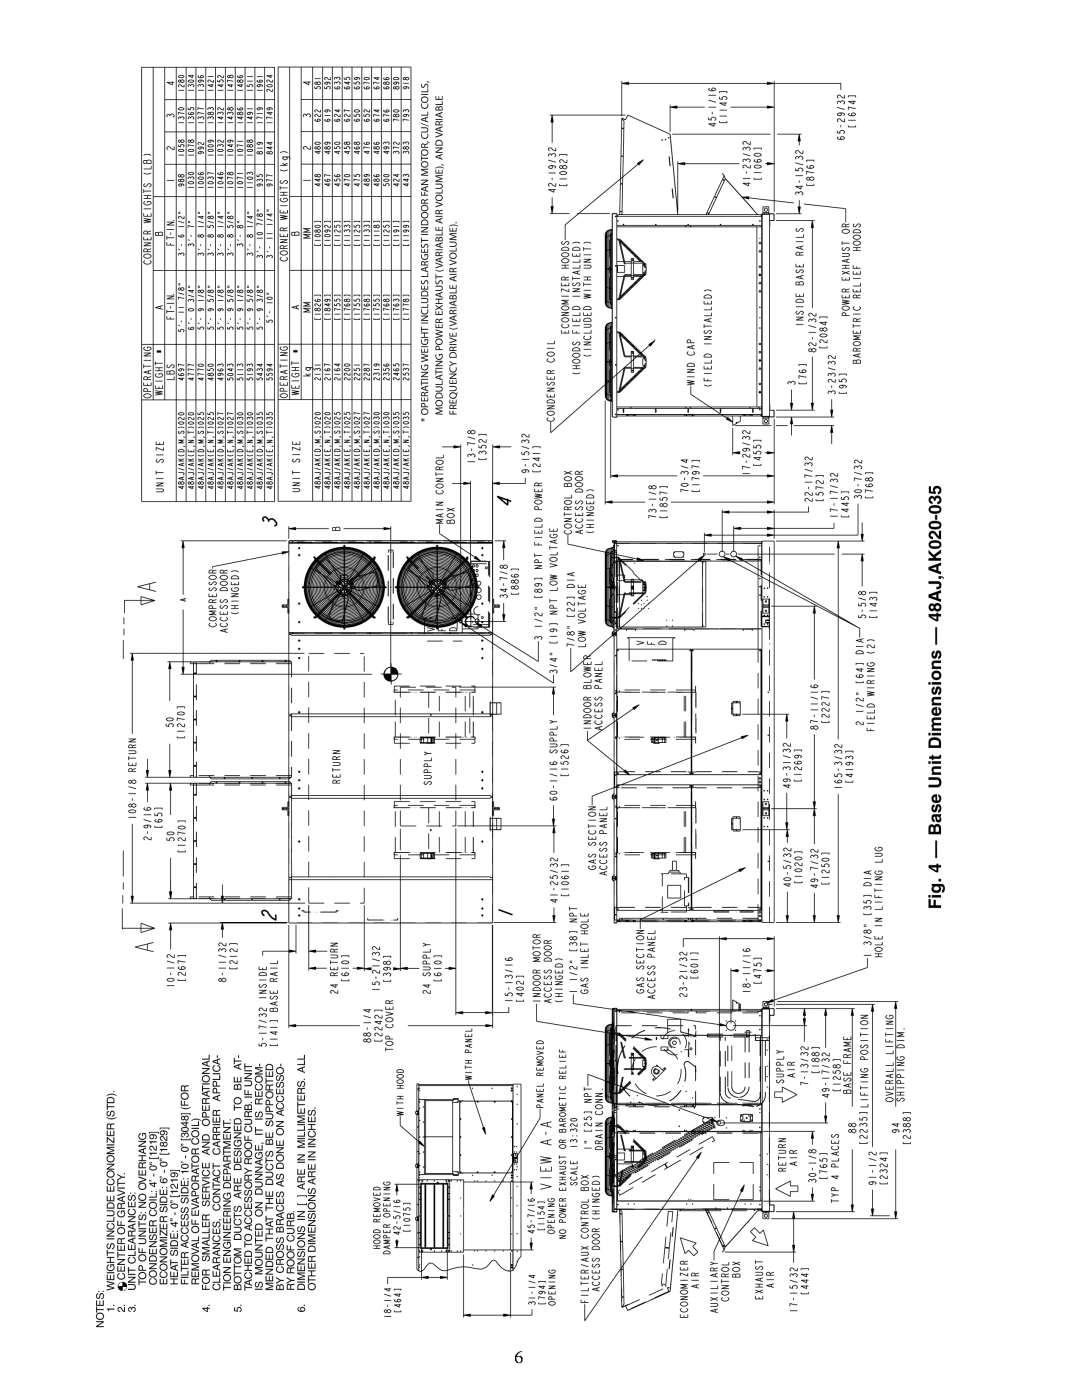 Carrier installation instructions Base Unit Dimensions - 48AJ,AK020-035, a48-8235 